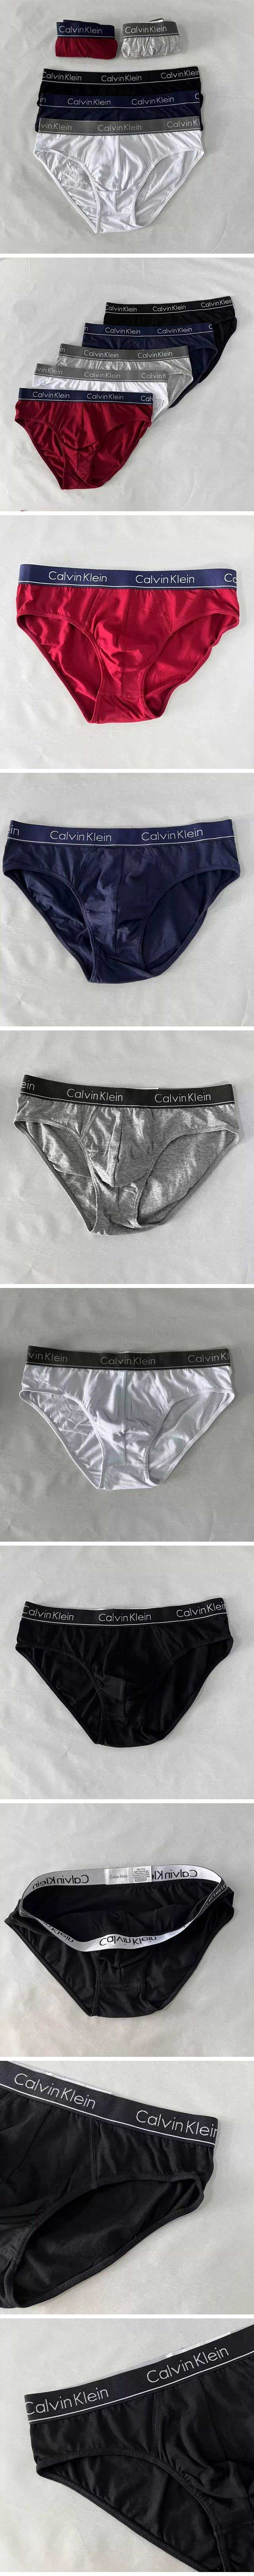 Calvin Klein Briefs Pants カルバンクライン ブリーフパンツ